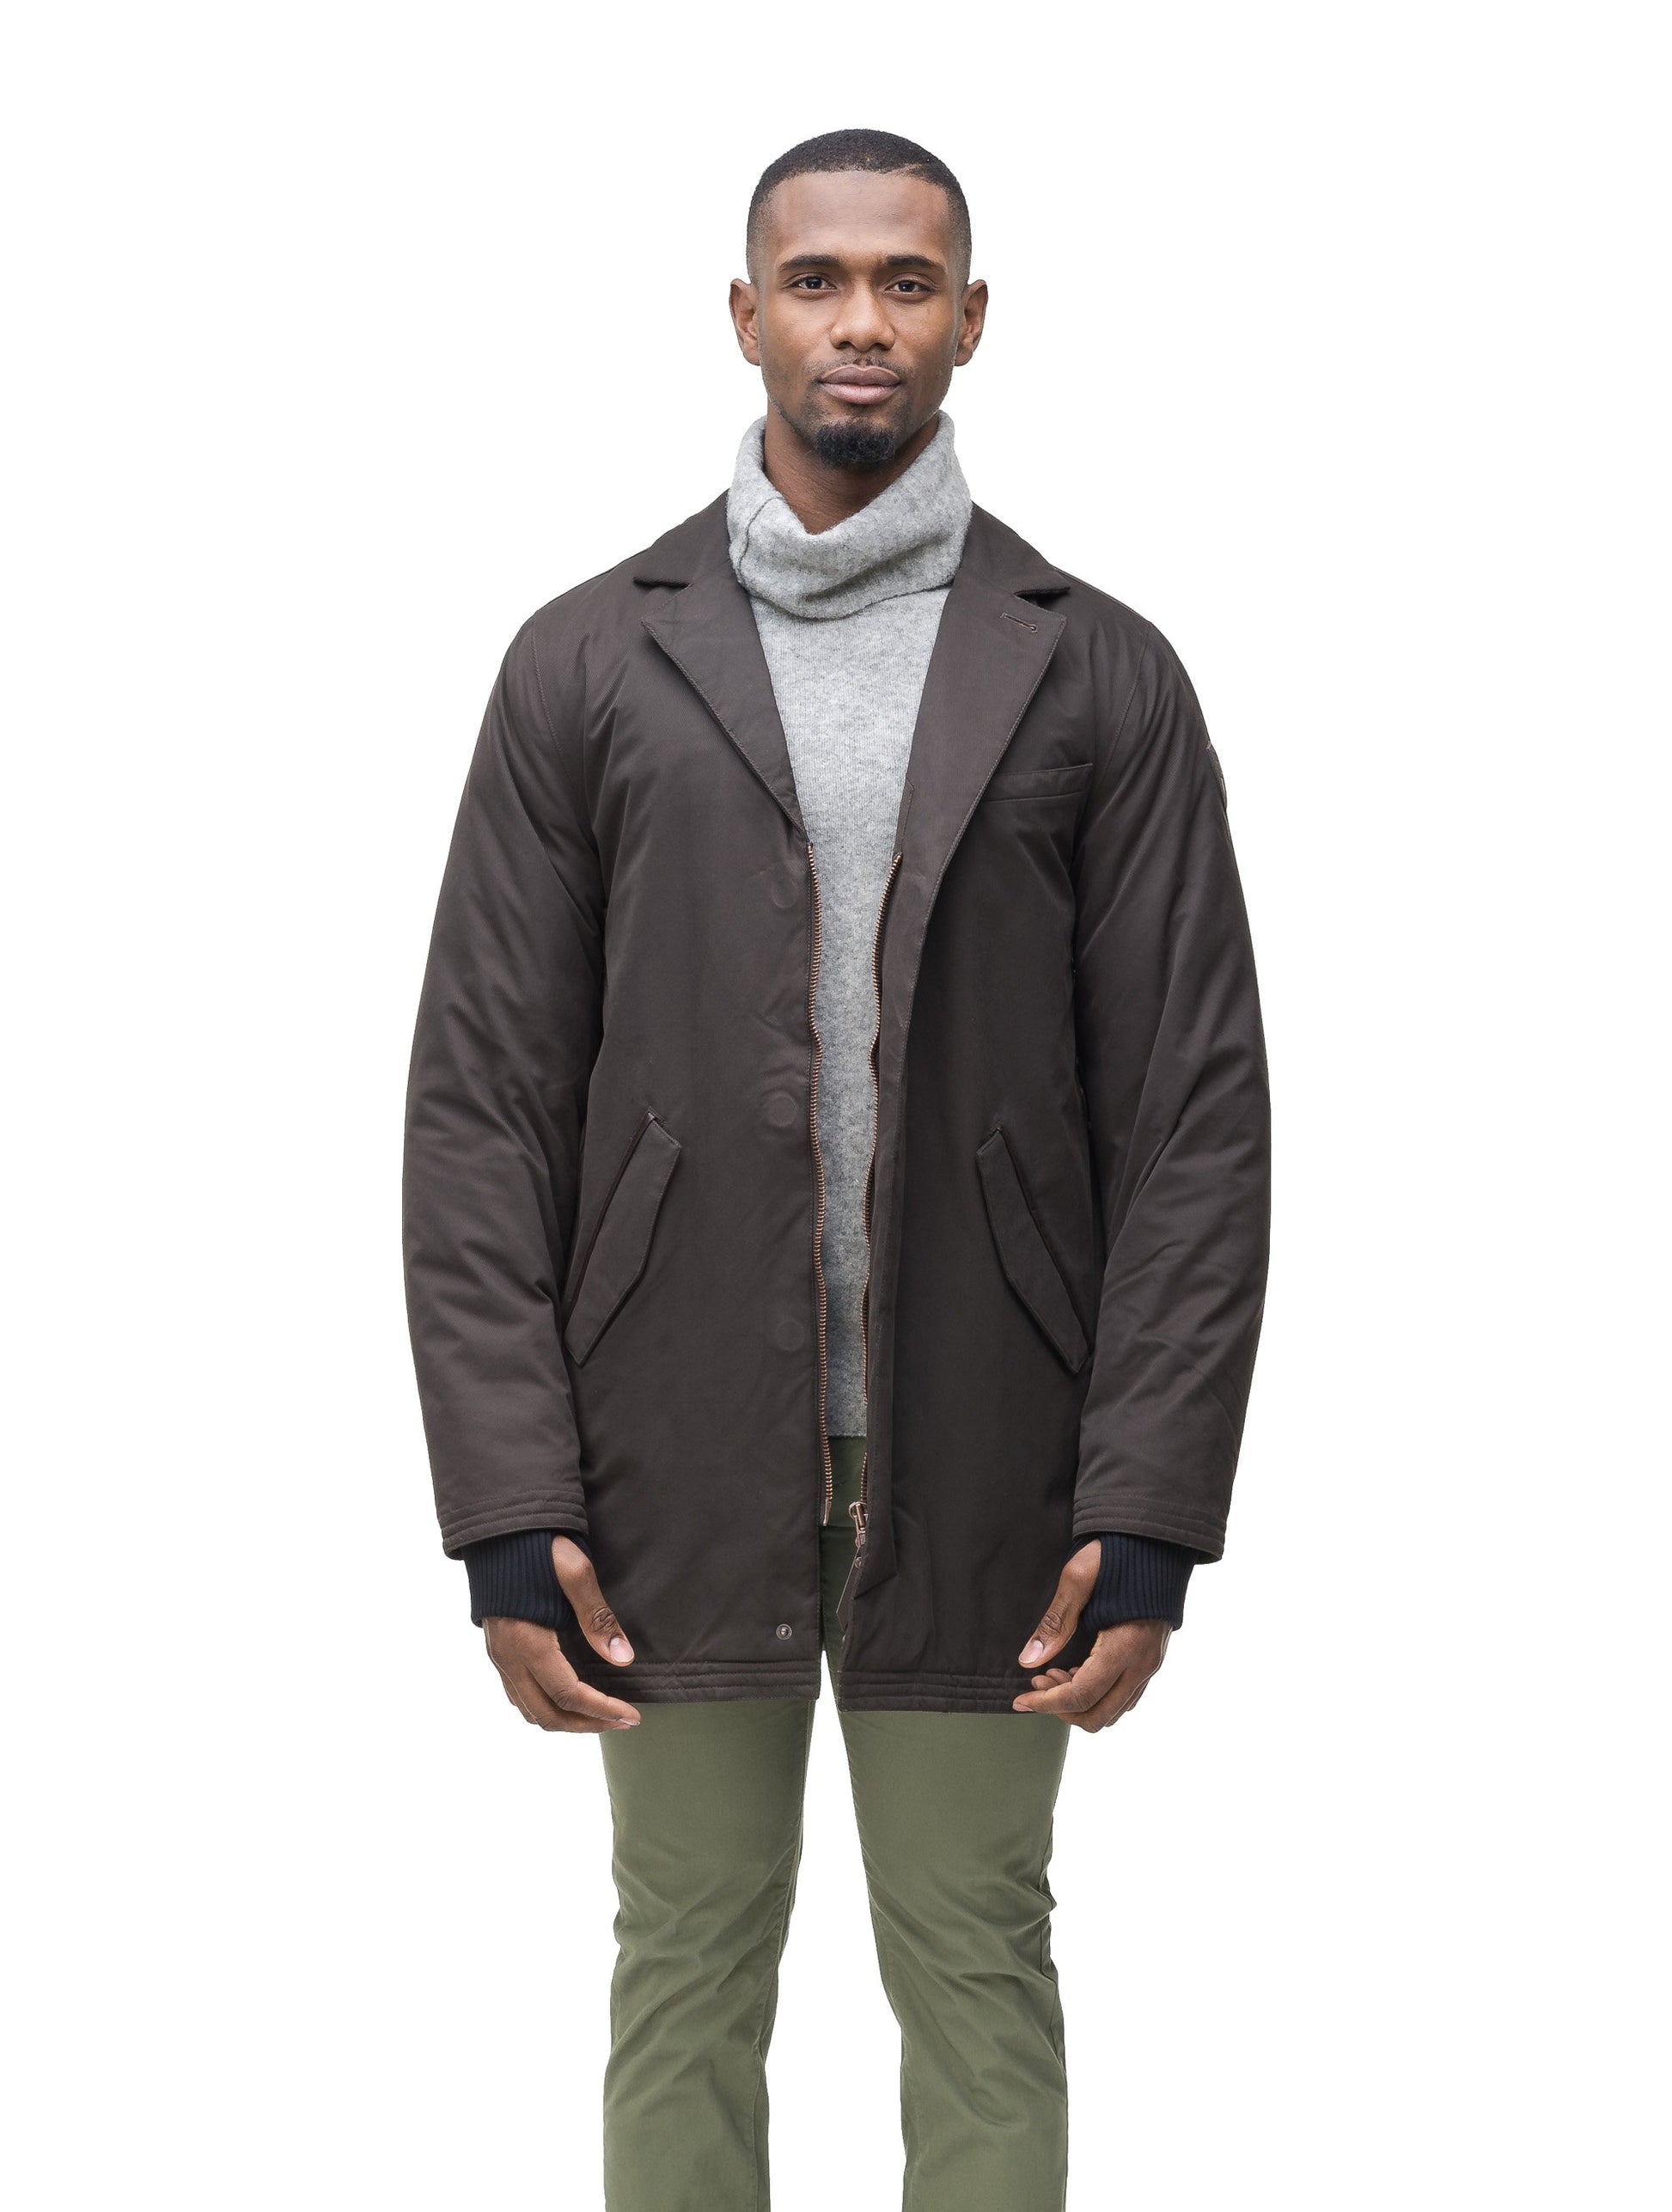 Men's classic overcoat that's lightly down filled, windproof and waterproof in Dark Brown